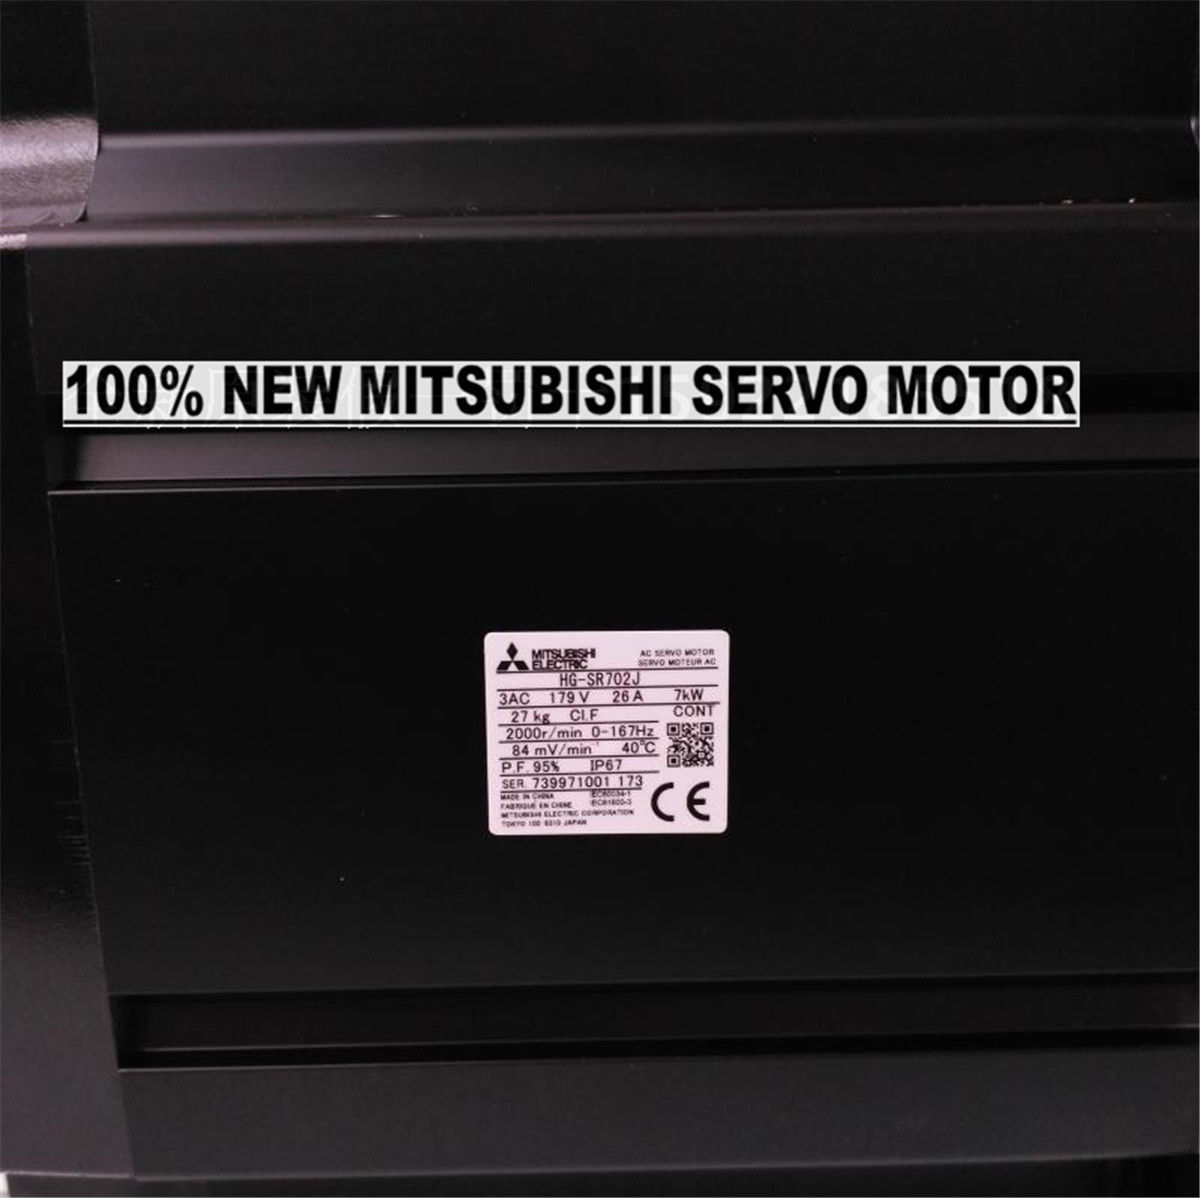 NEW Mitsubishi Servo Motor HG-SR702J in box HGSR702J - zum Schließen ins Bild klicken